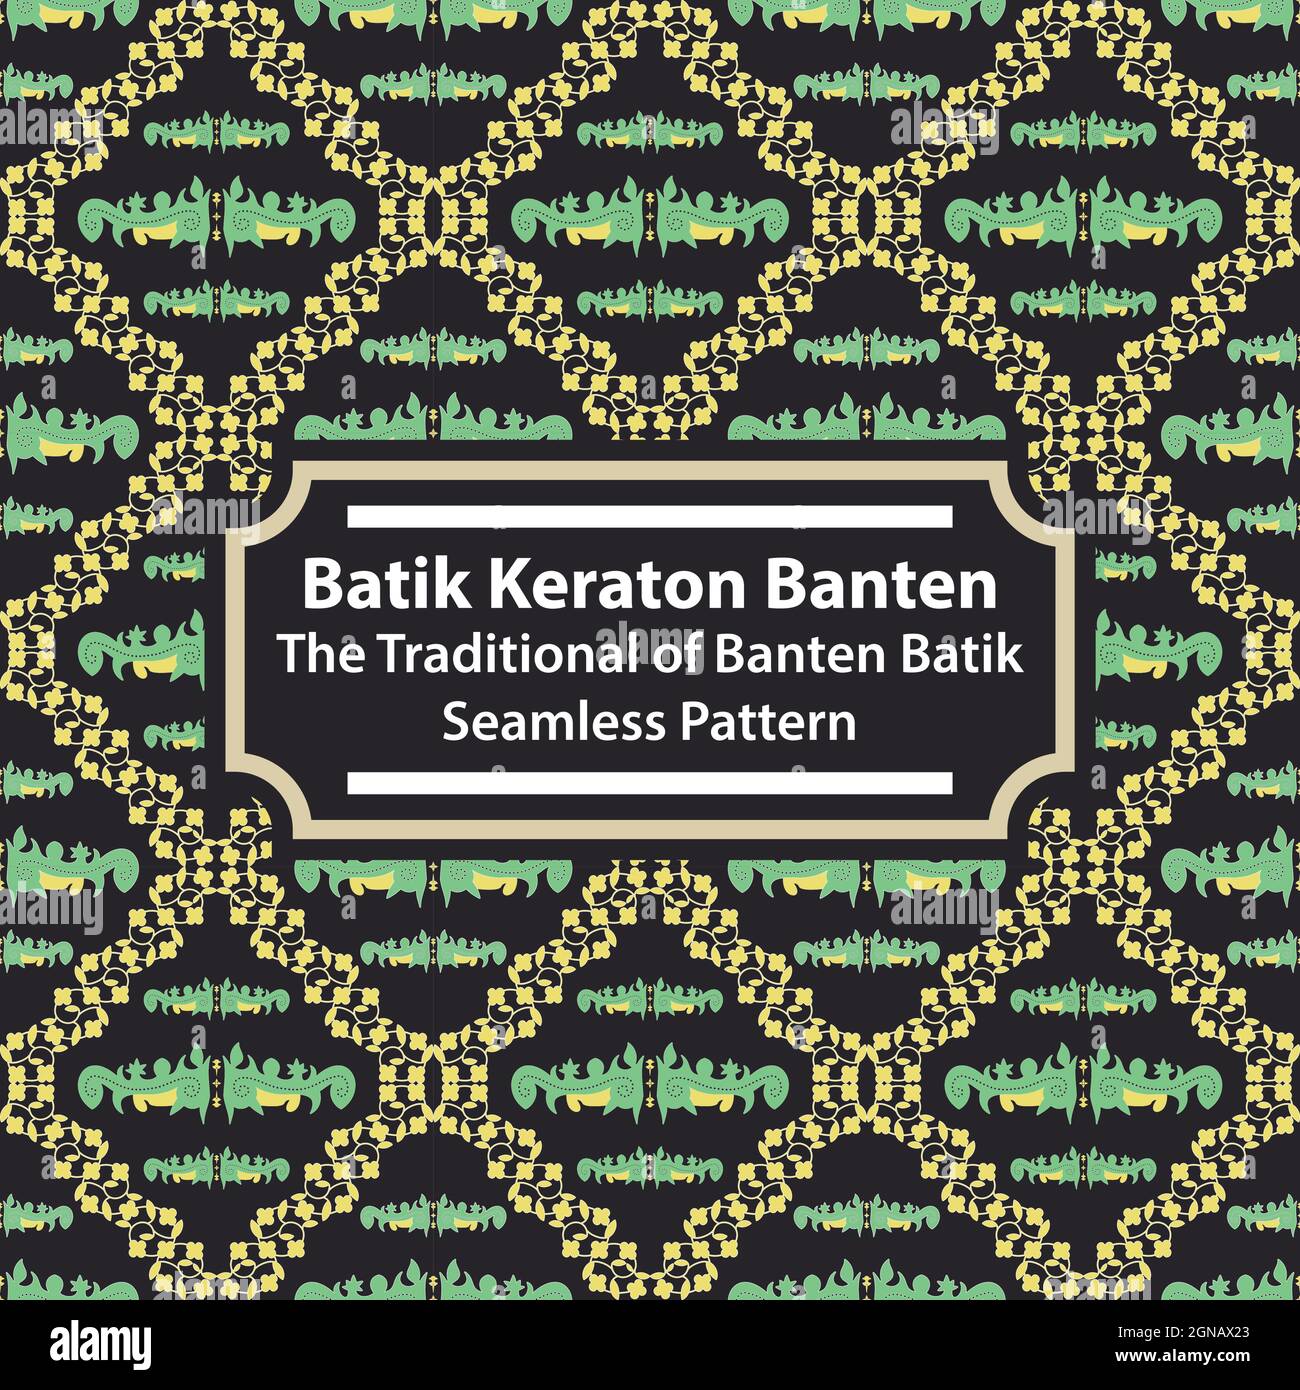 Batik Keraton Banten - The Traditional of Banten Batik Seamless Pattern Stock Vector